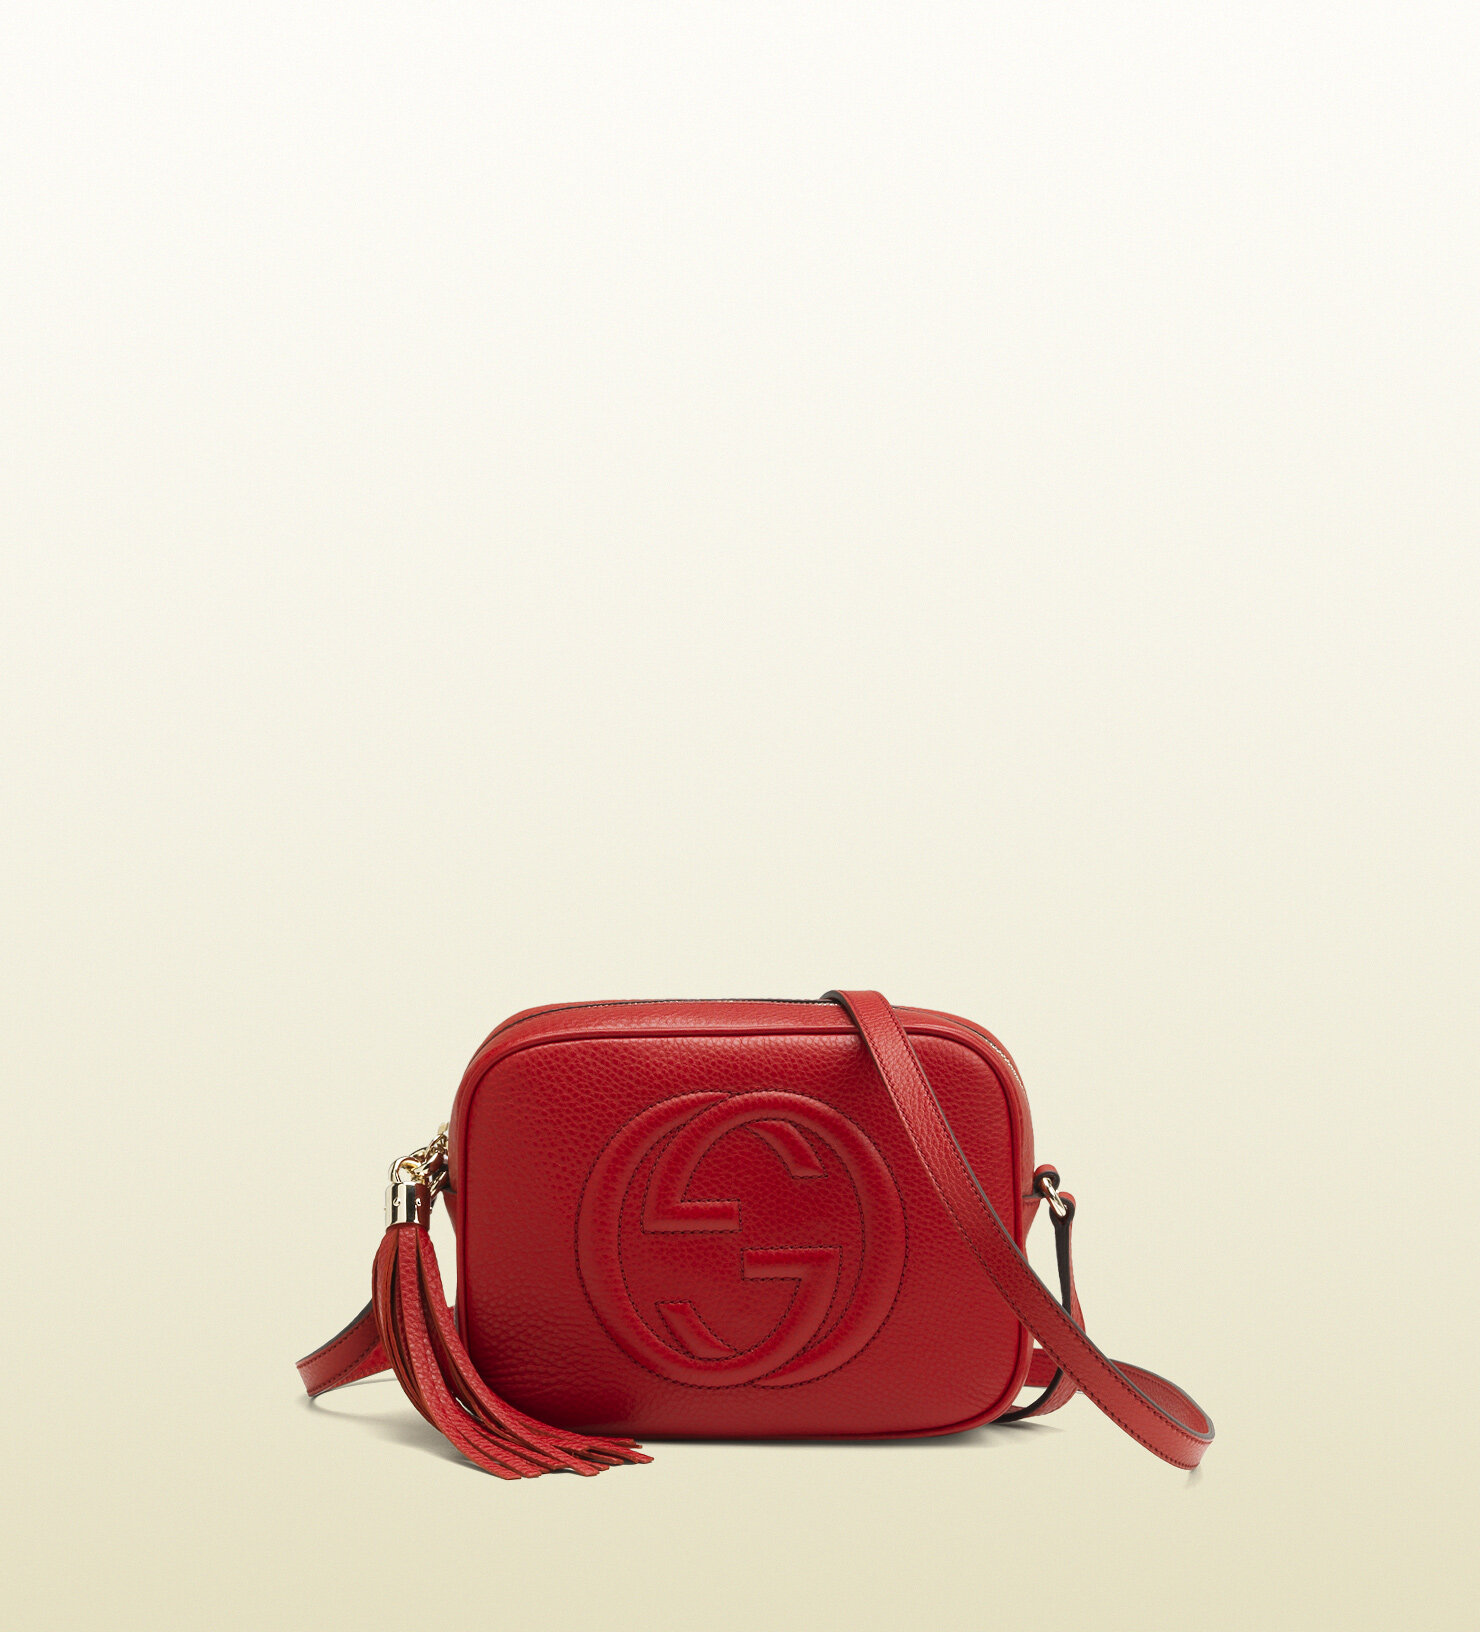 Gucci Soho Leather Shoulder Bag in Red.jpg